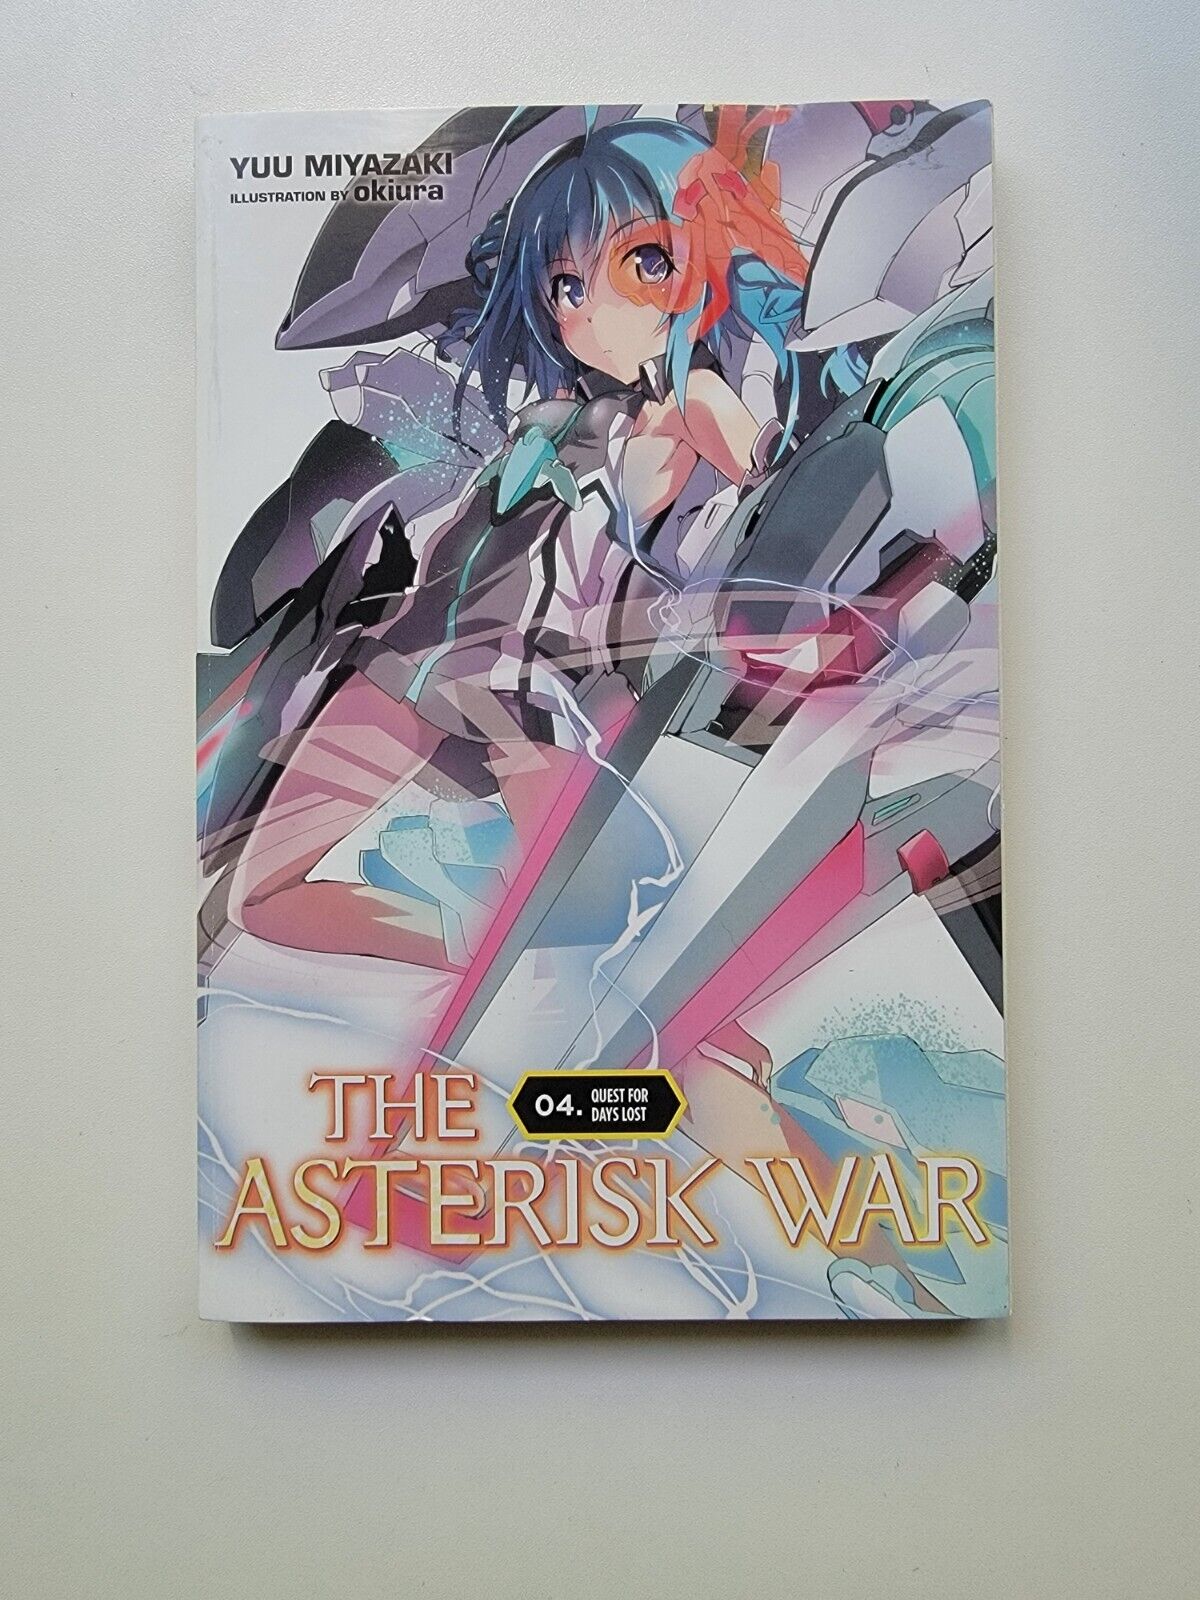 The Asterisk War, Vol. 4, by Yuu Miyazaki/okiura, English Light Novel 2017